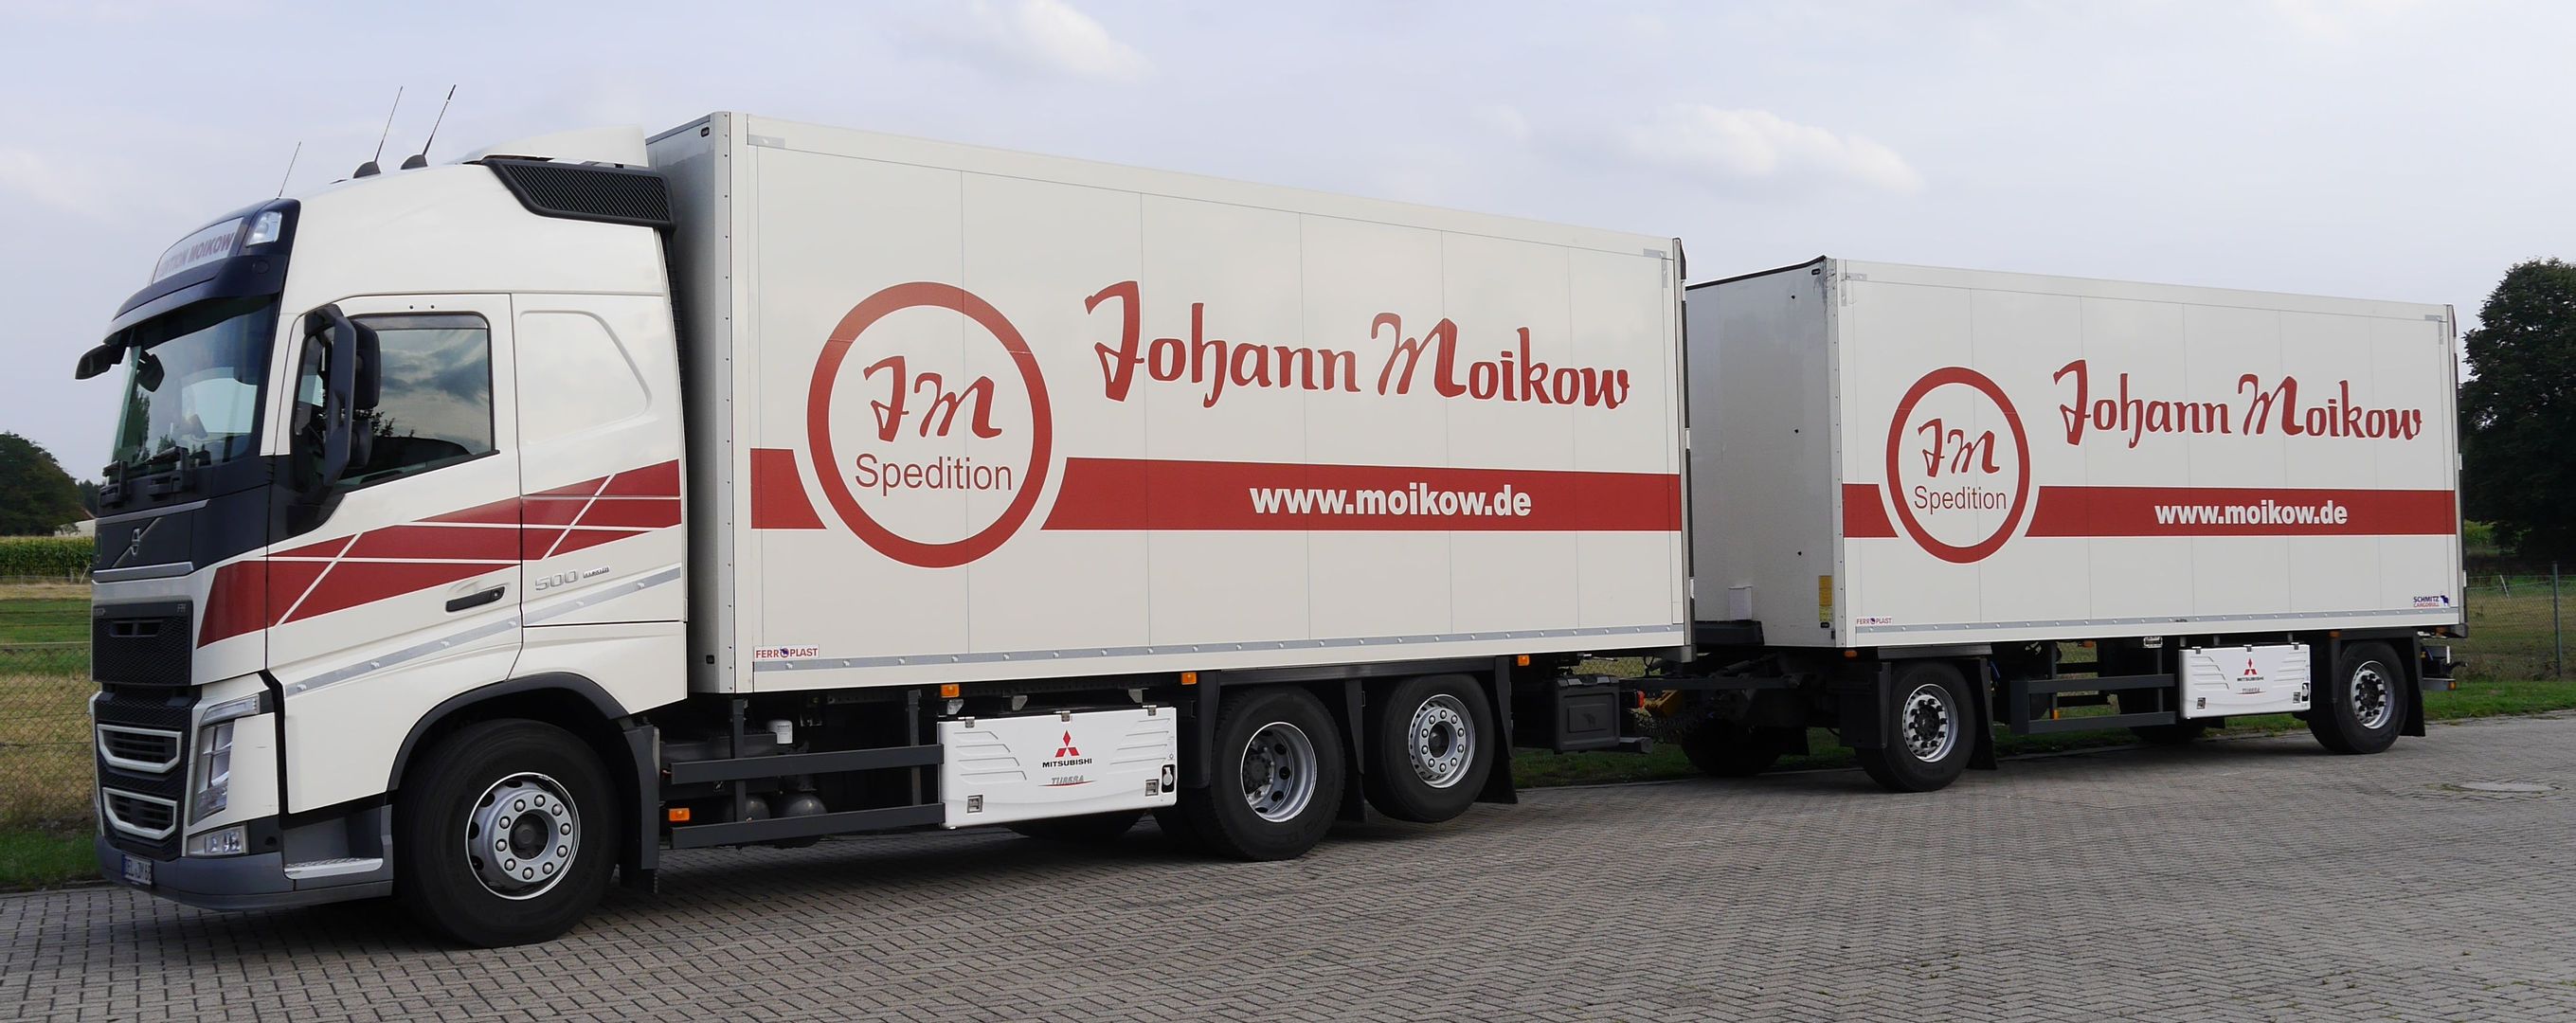 Johann Moikow GmbH & Co.